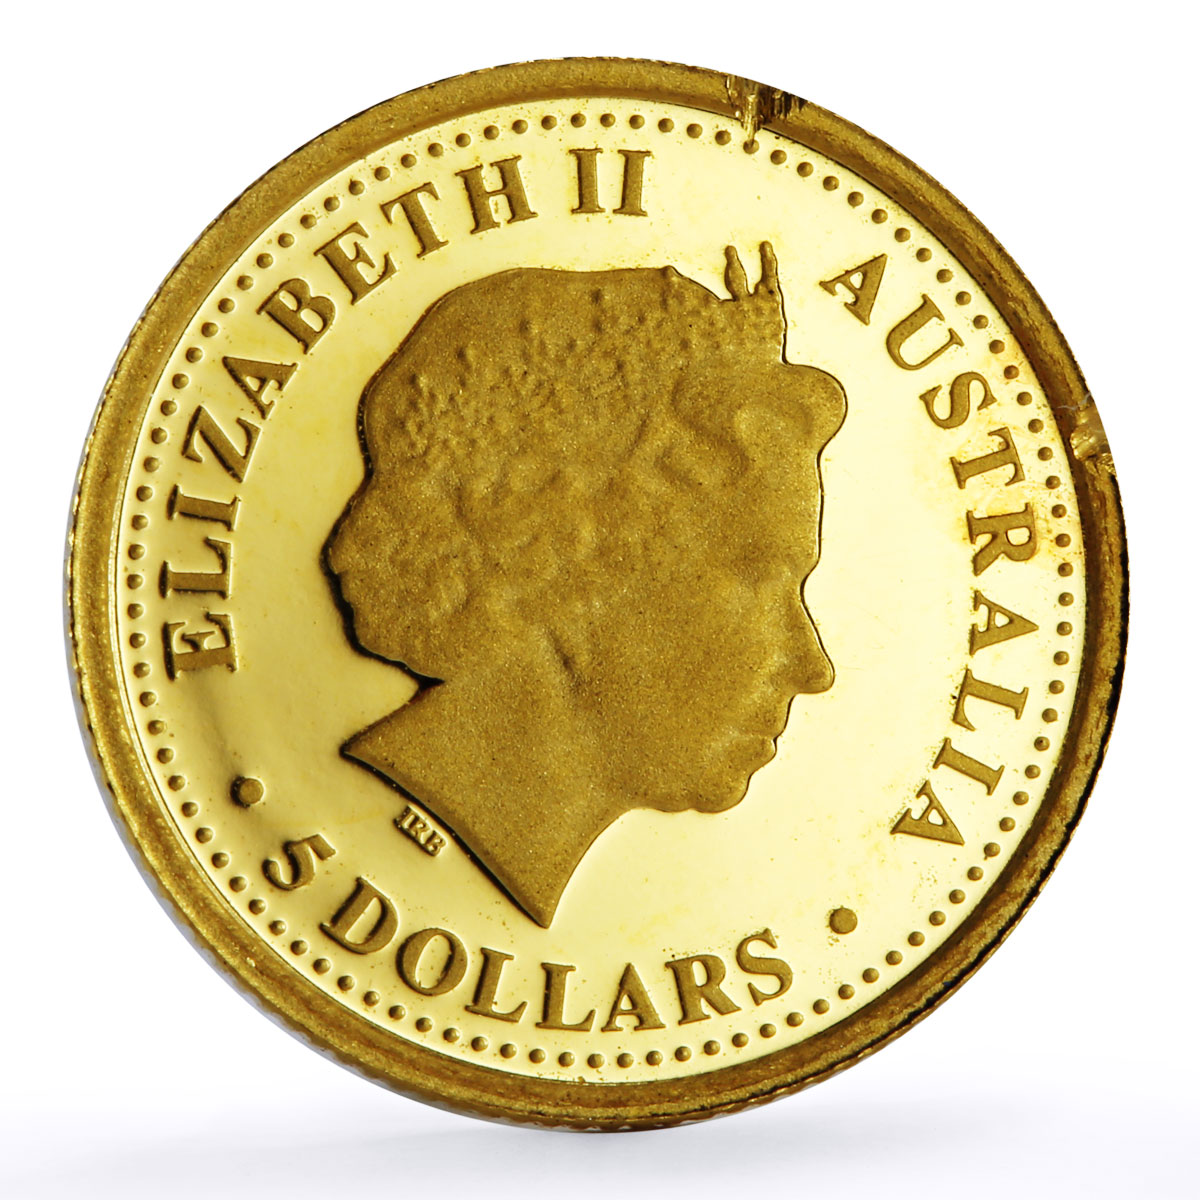 Australia 5 dollars Discovers Dingo Dog Animals Fauna proof gold coin 2008